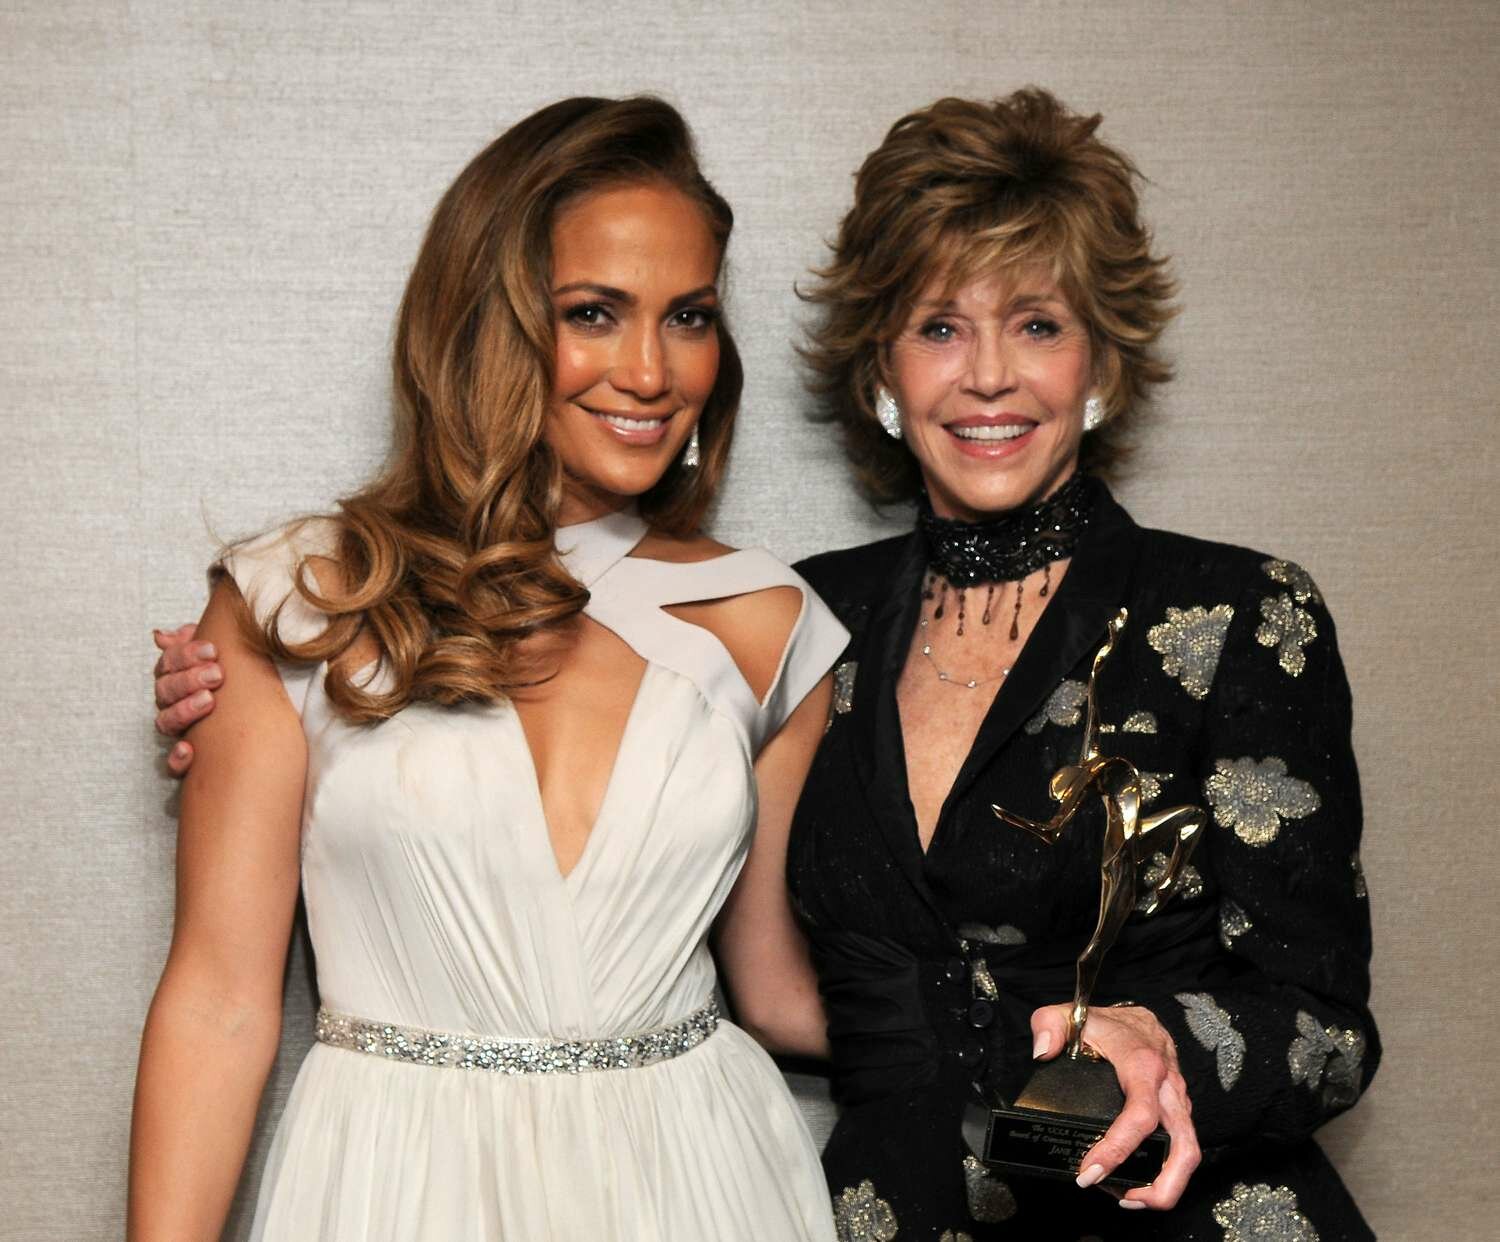 Jennifer Lopez Jane Fonda Arms Around Each Other UCLA Longevity Center ICON Awards 2011